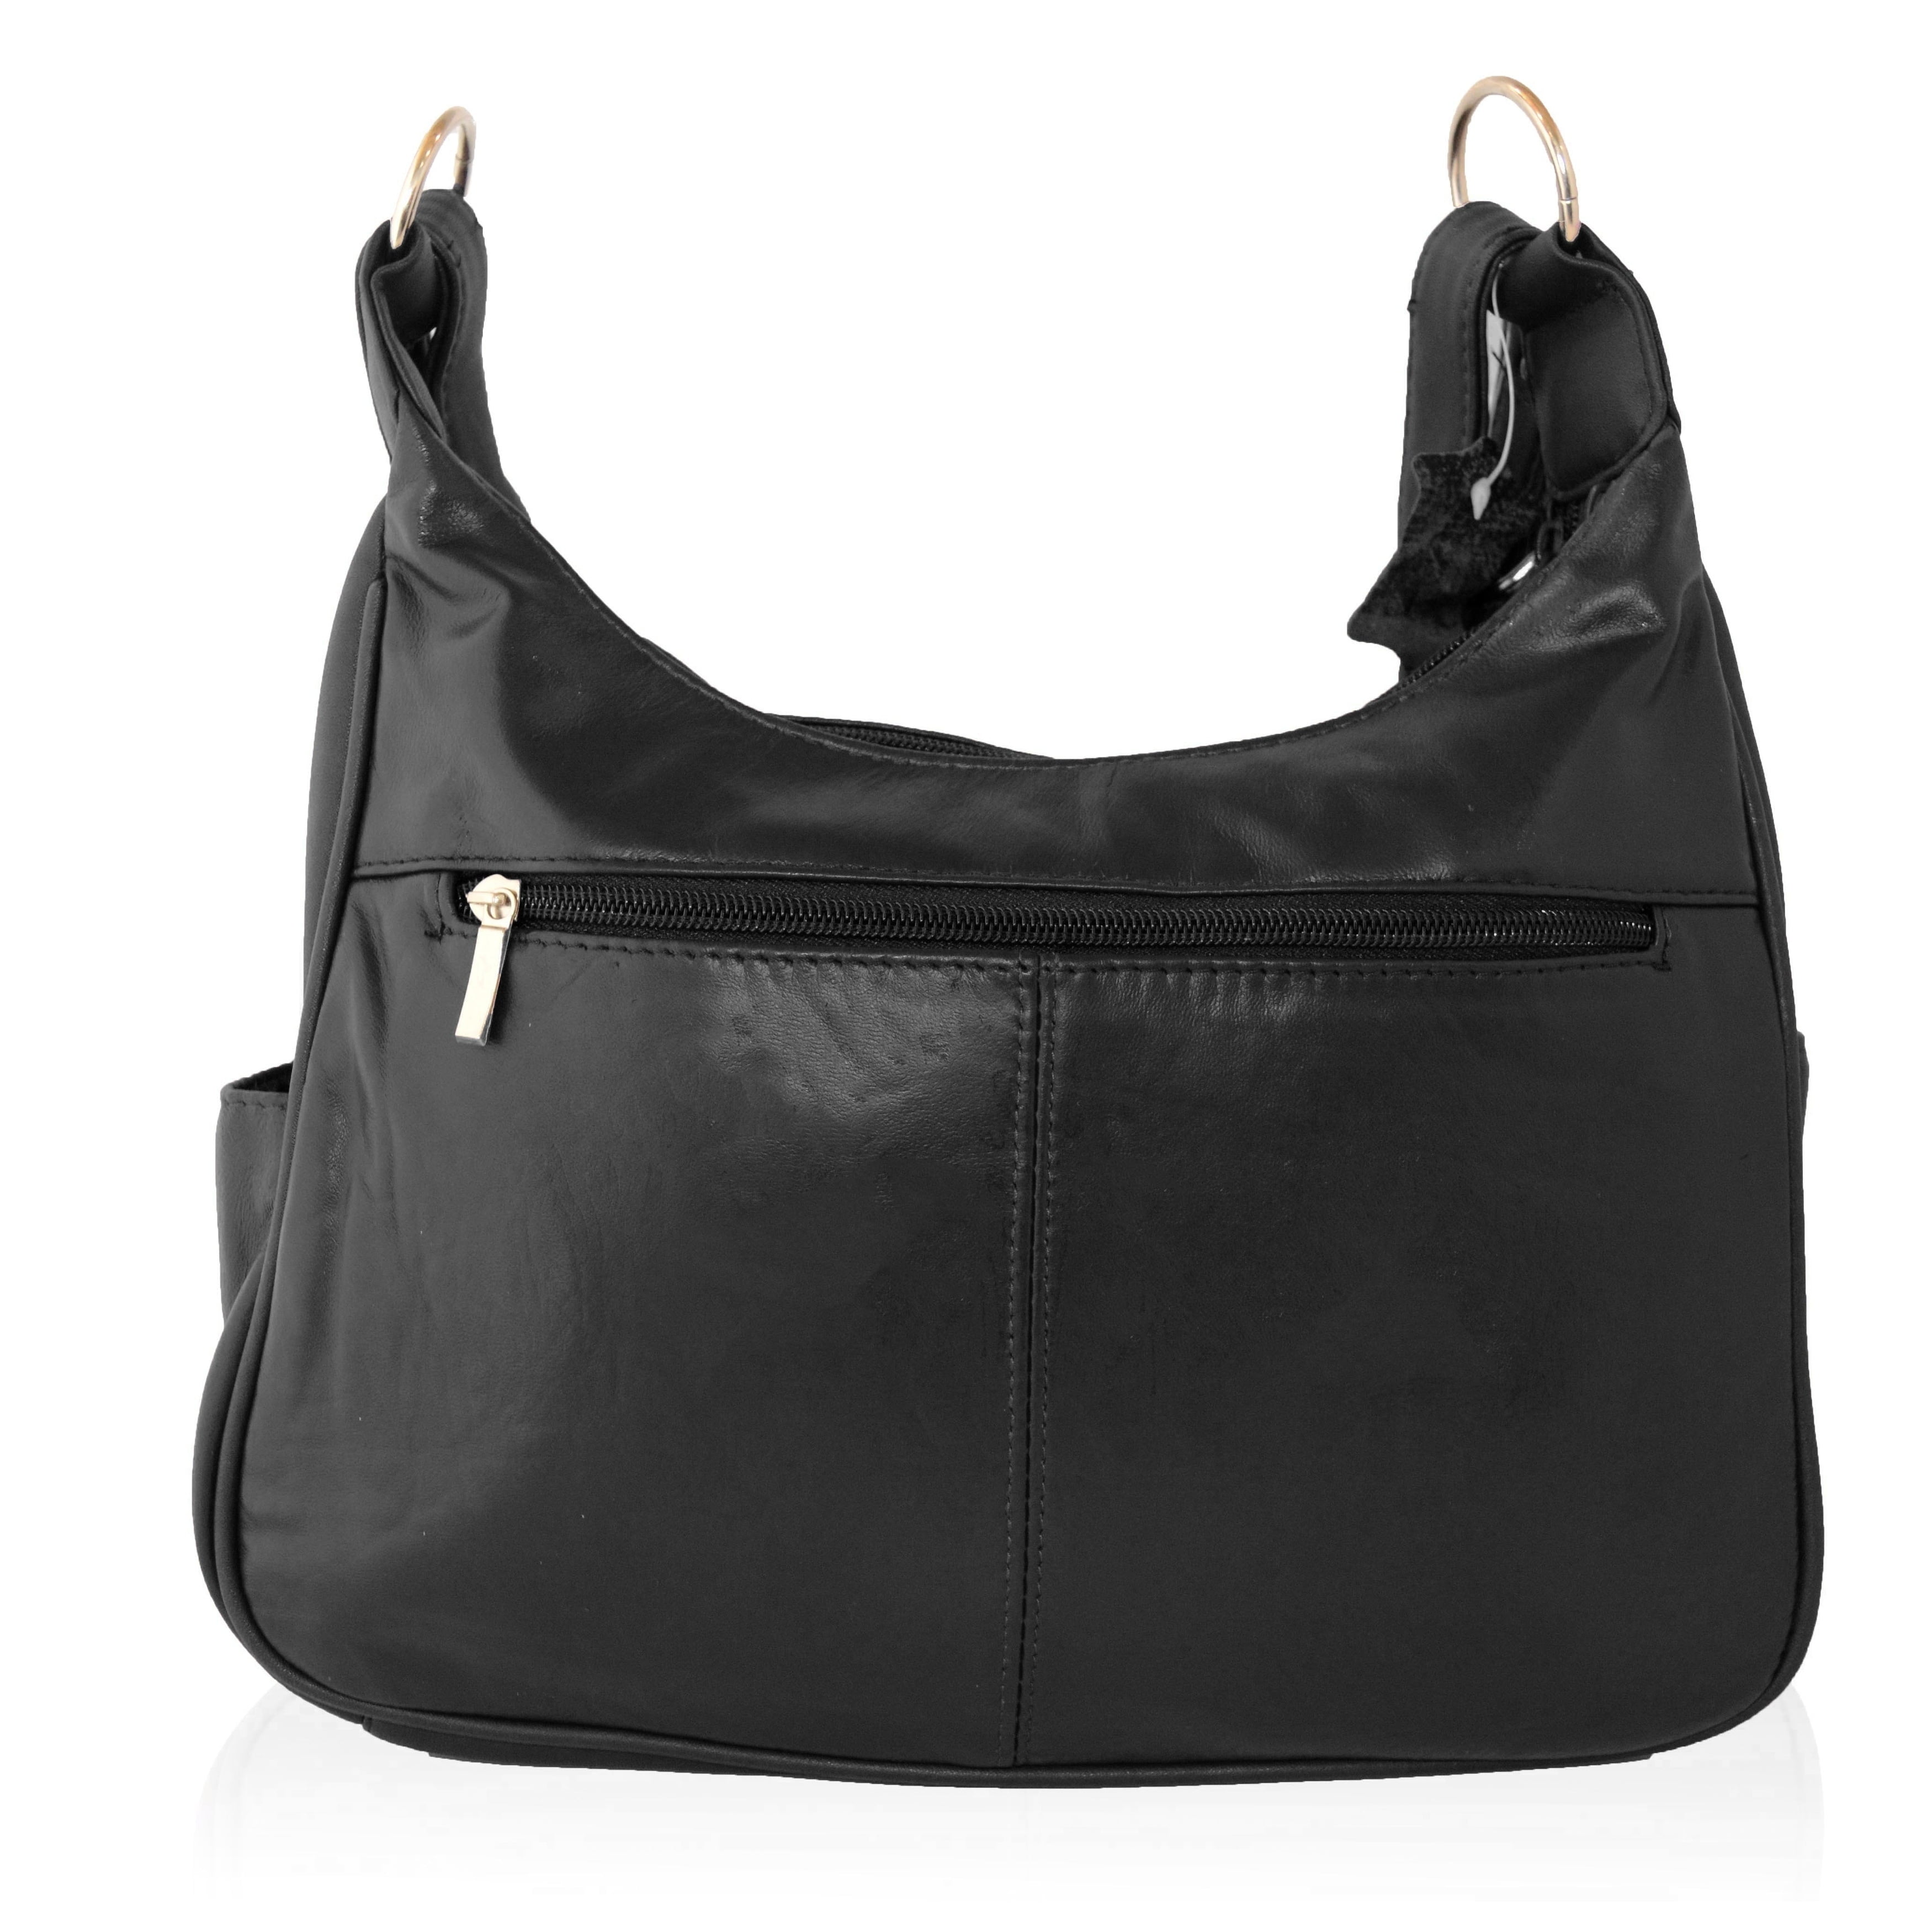 Afonie - AFONiE The Classic Women Leather Shoulder Handbag Black ...